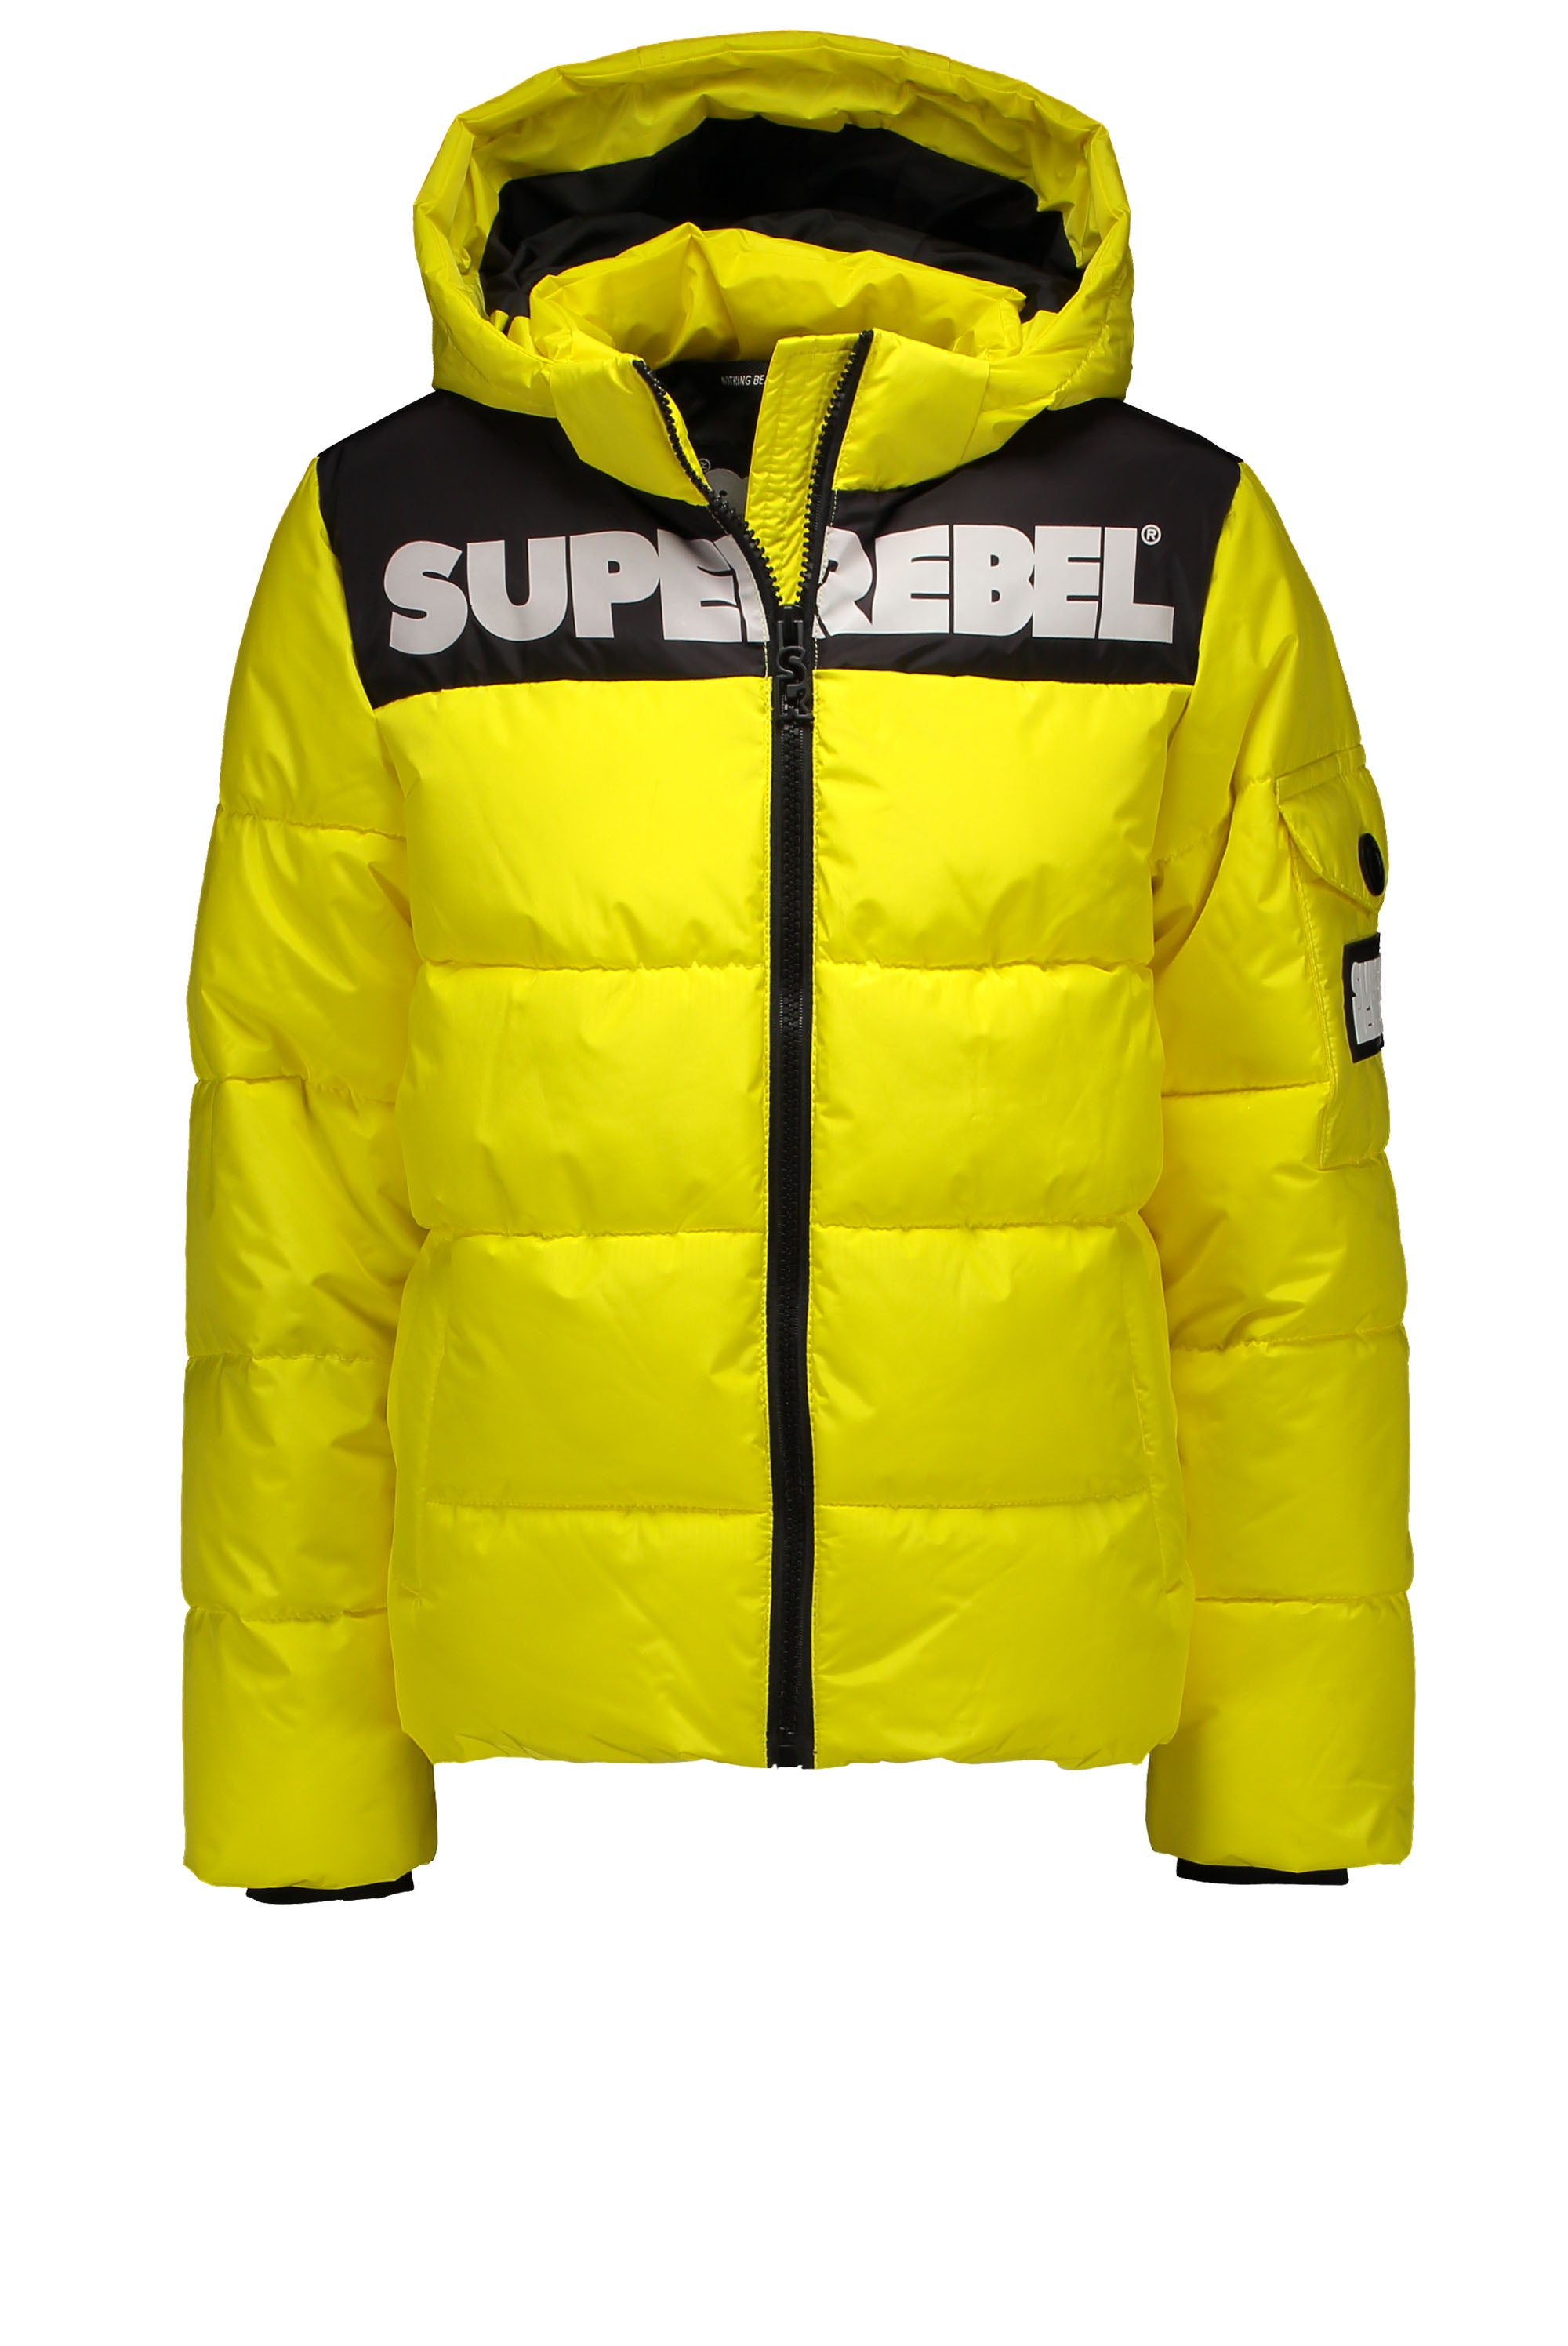 Super Rebel Winter Jacket STUNG Yellow